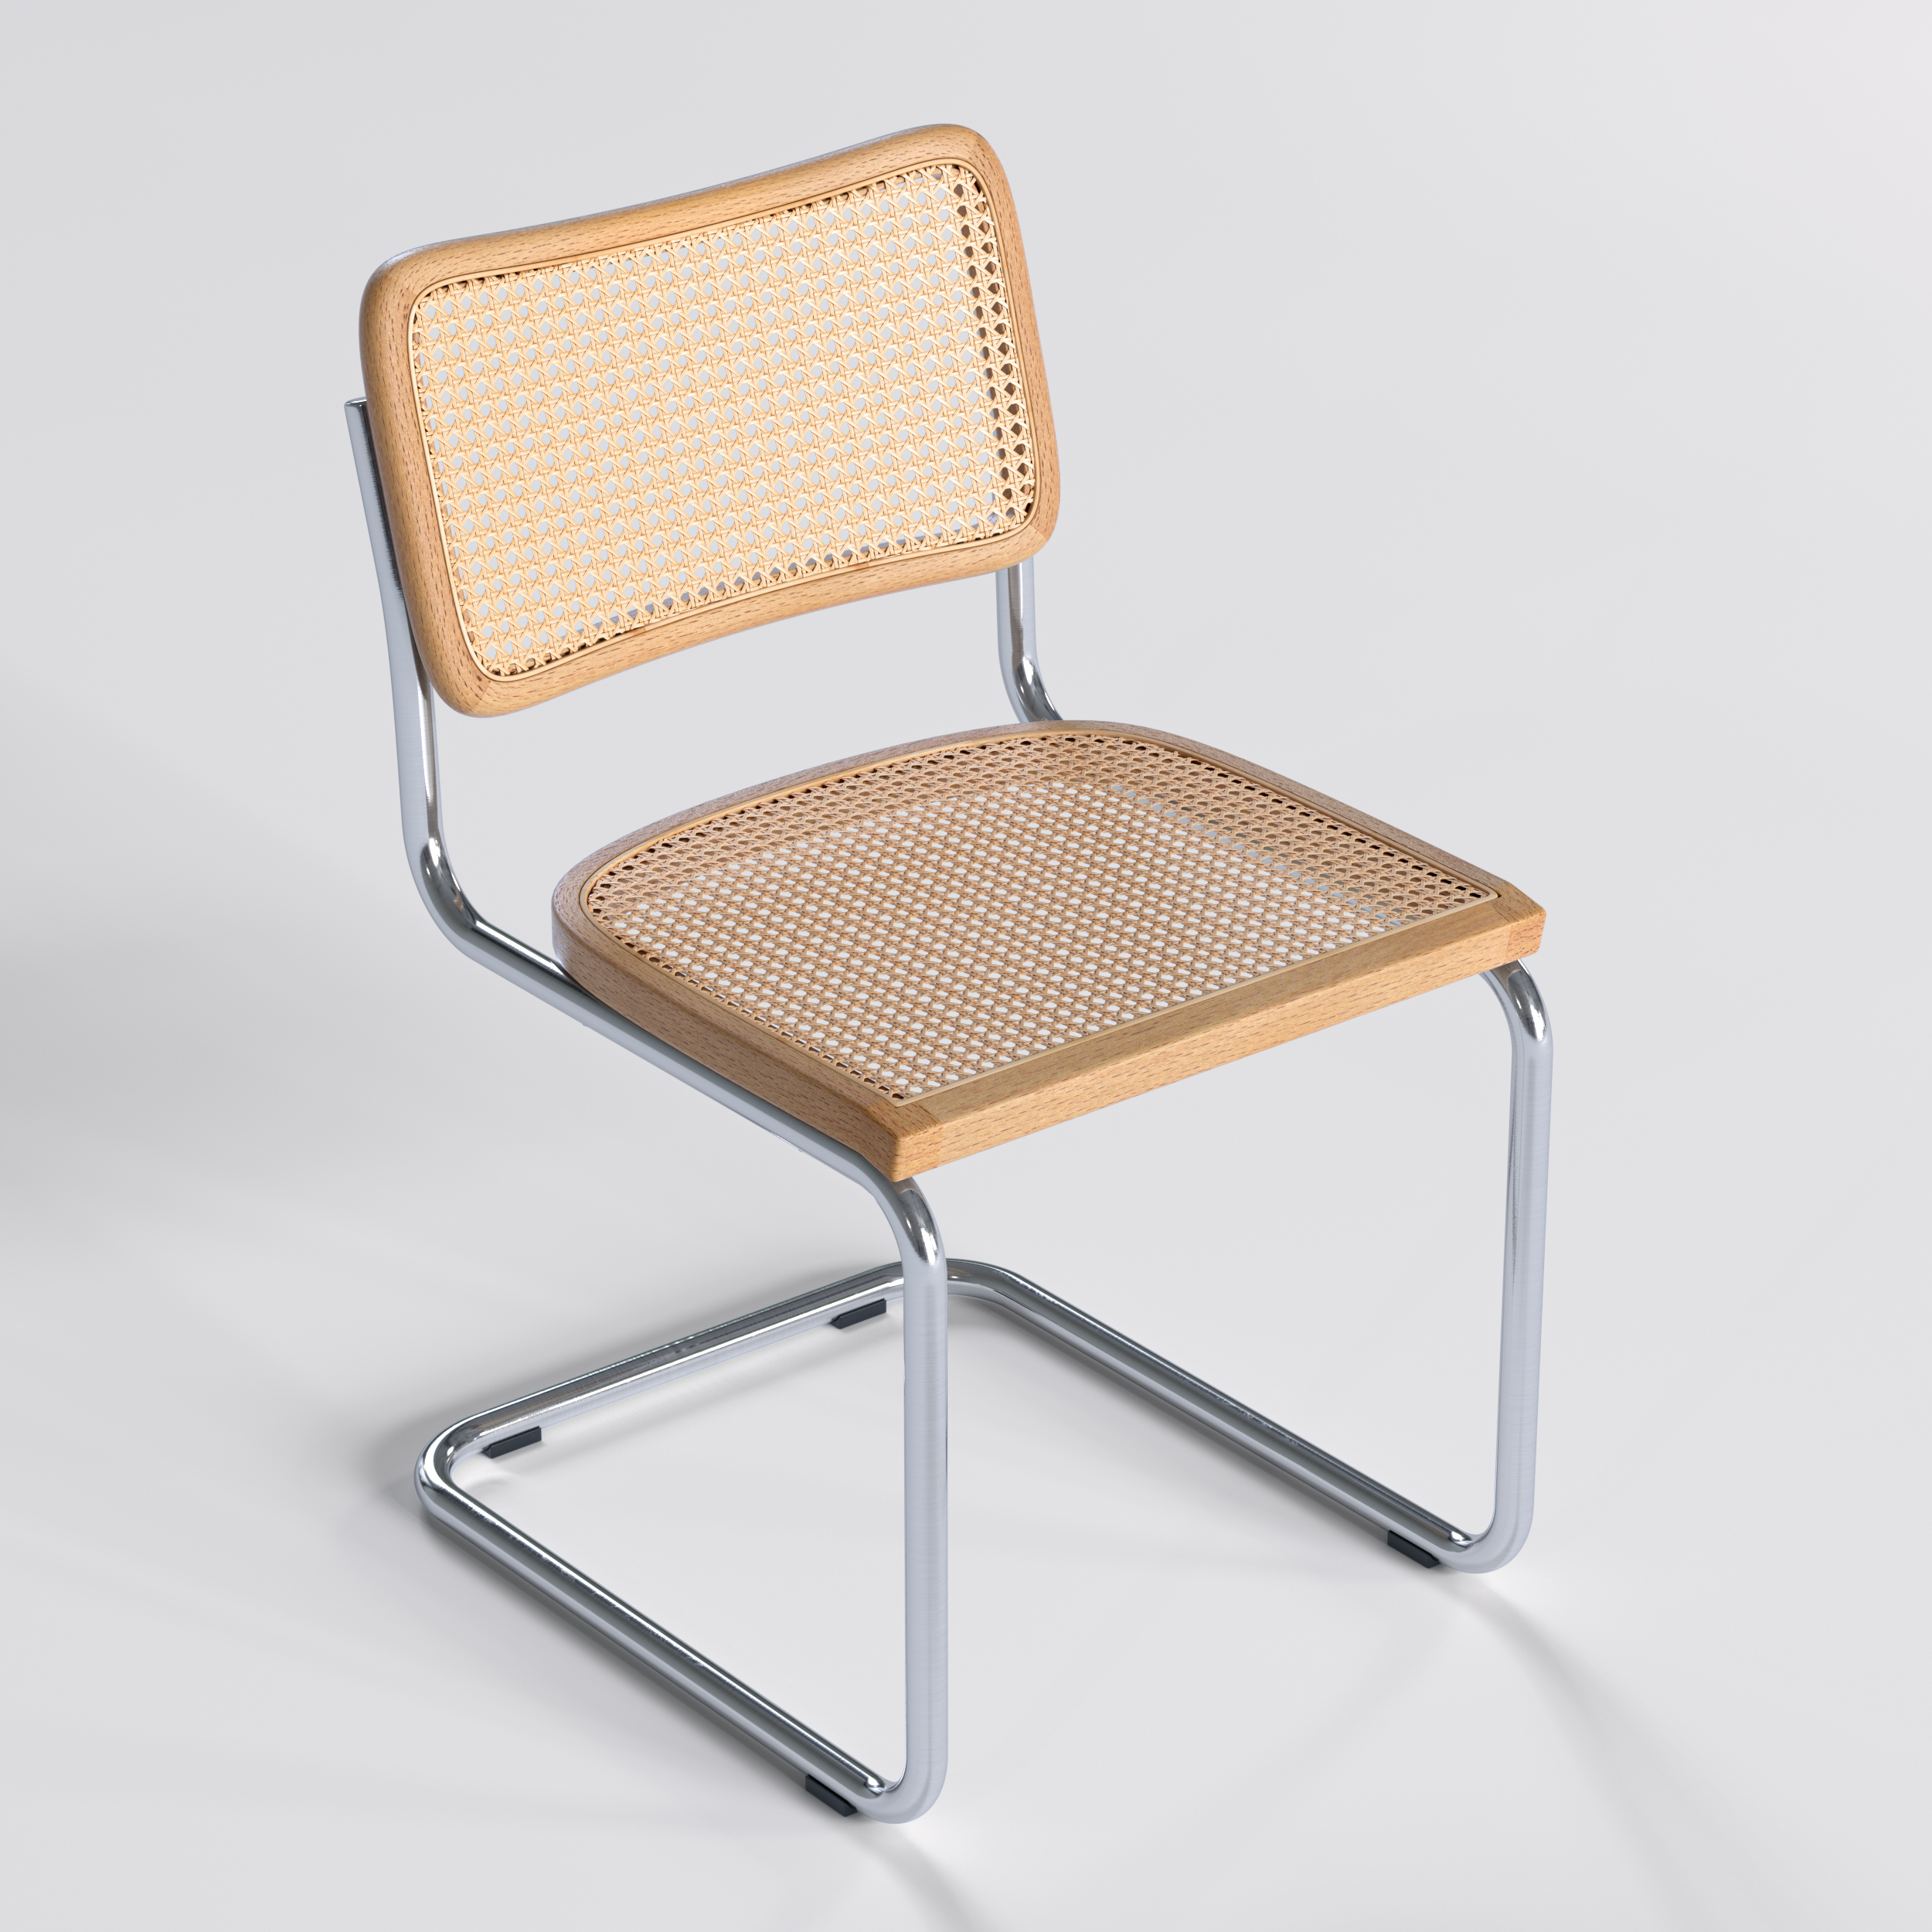 Marcel Breuer's Cesca Chair, a design classic now in 3D